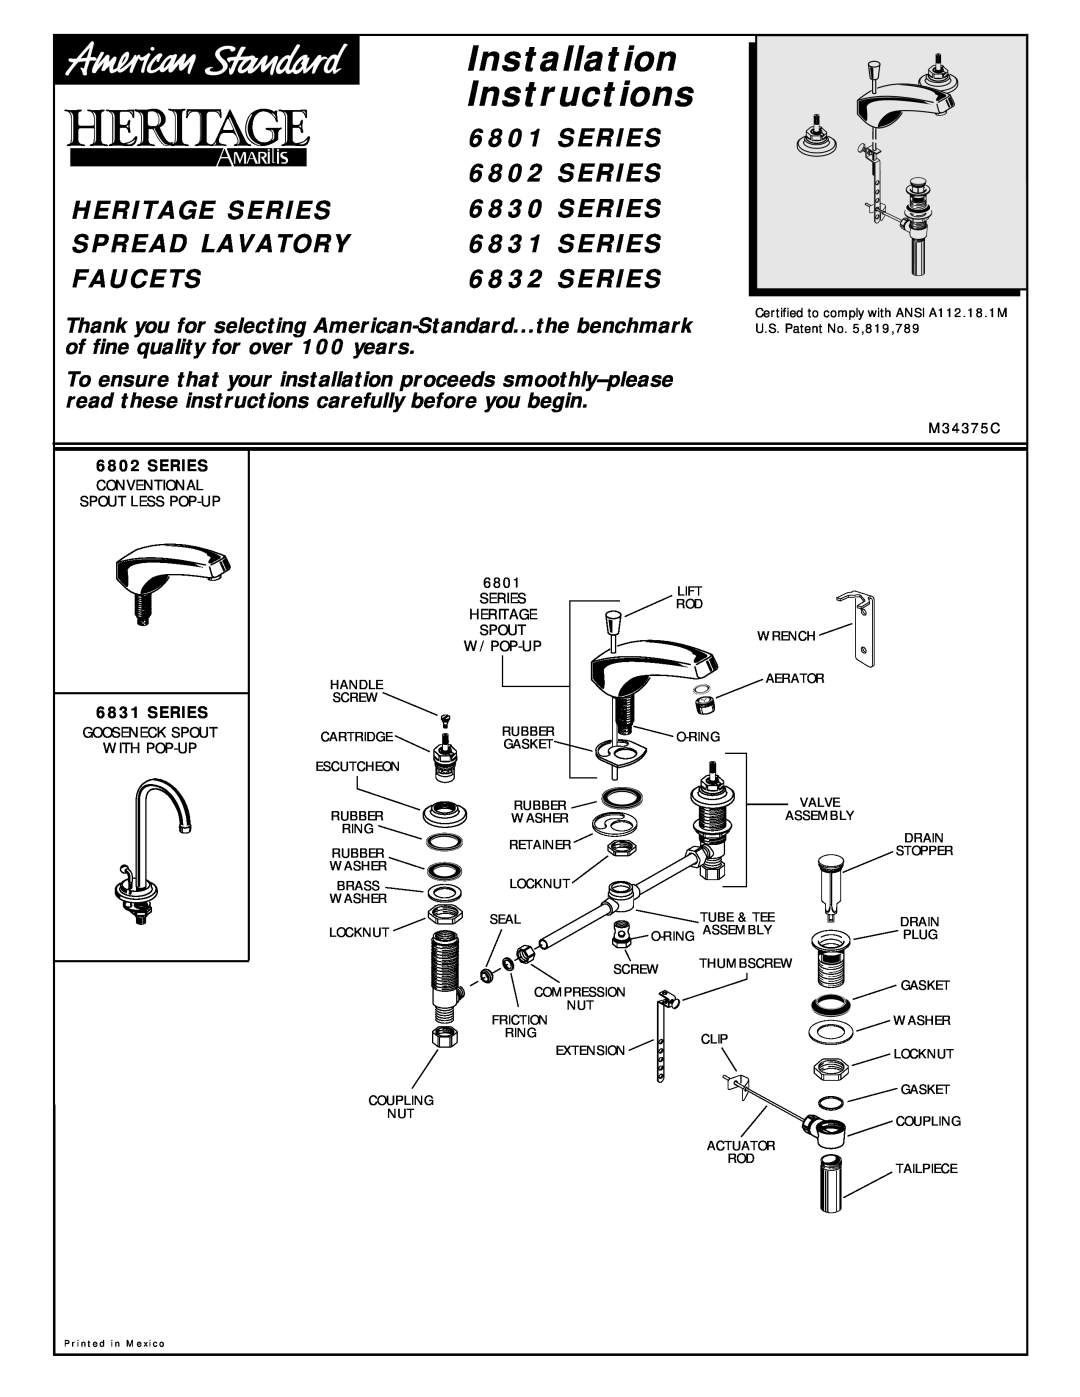 American Standard 6831 Series installation instructions Installation Instructions, Heritage Series, Spread Lavatory 